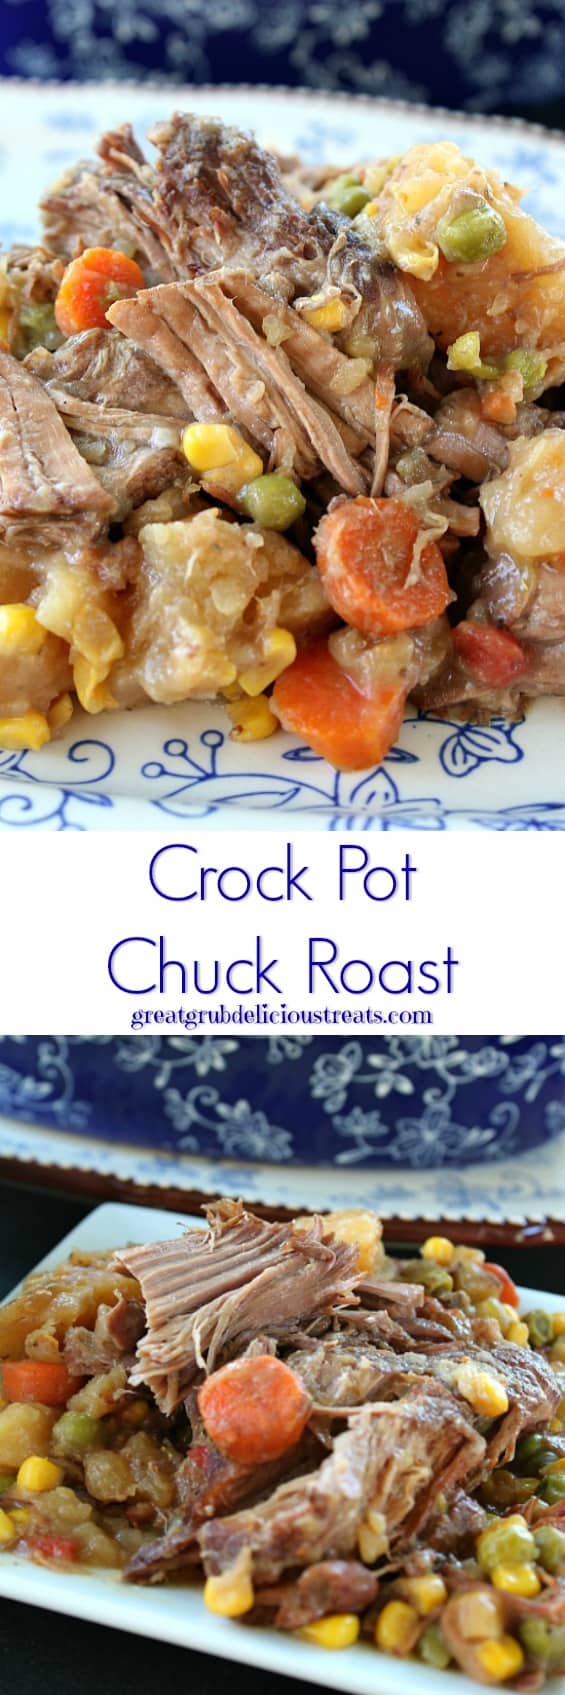 Crock Pot Chuck Roast